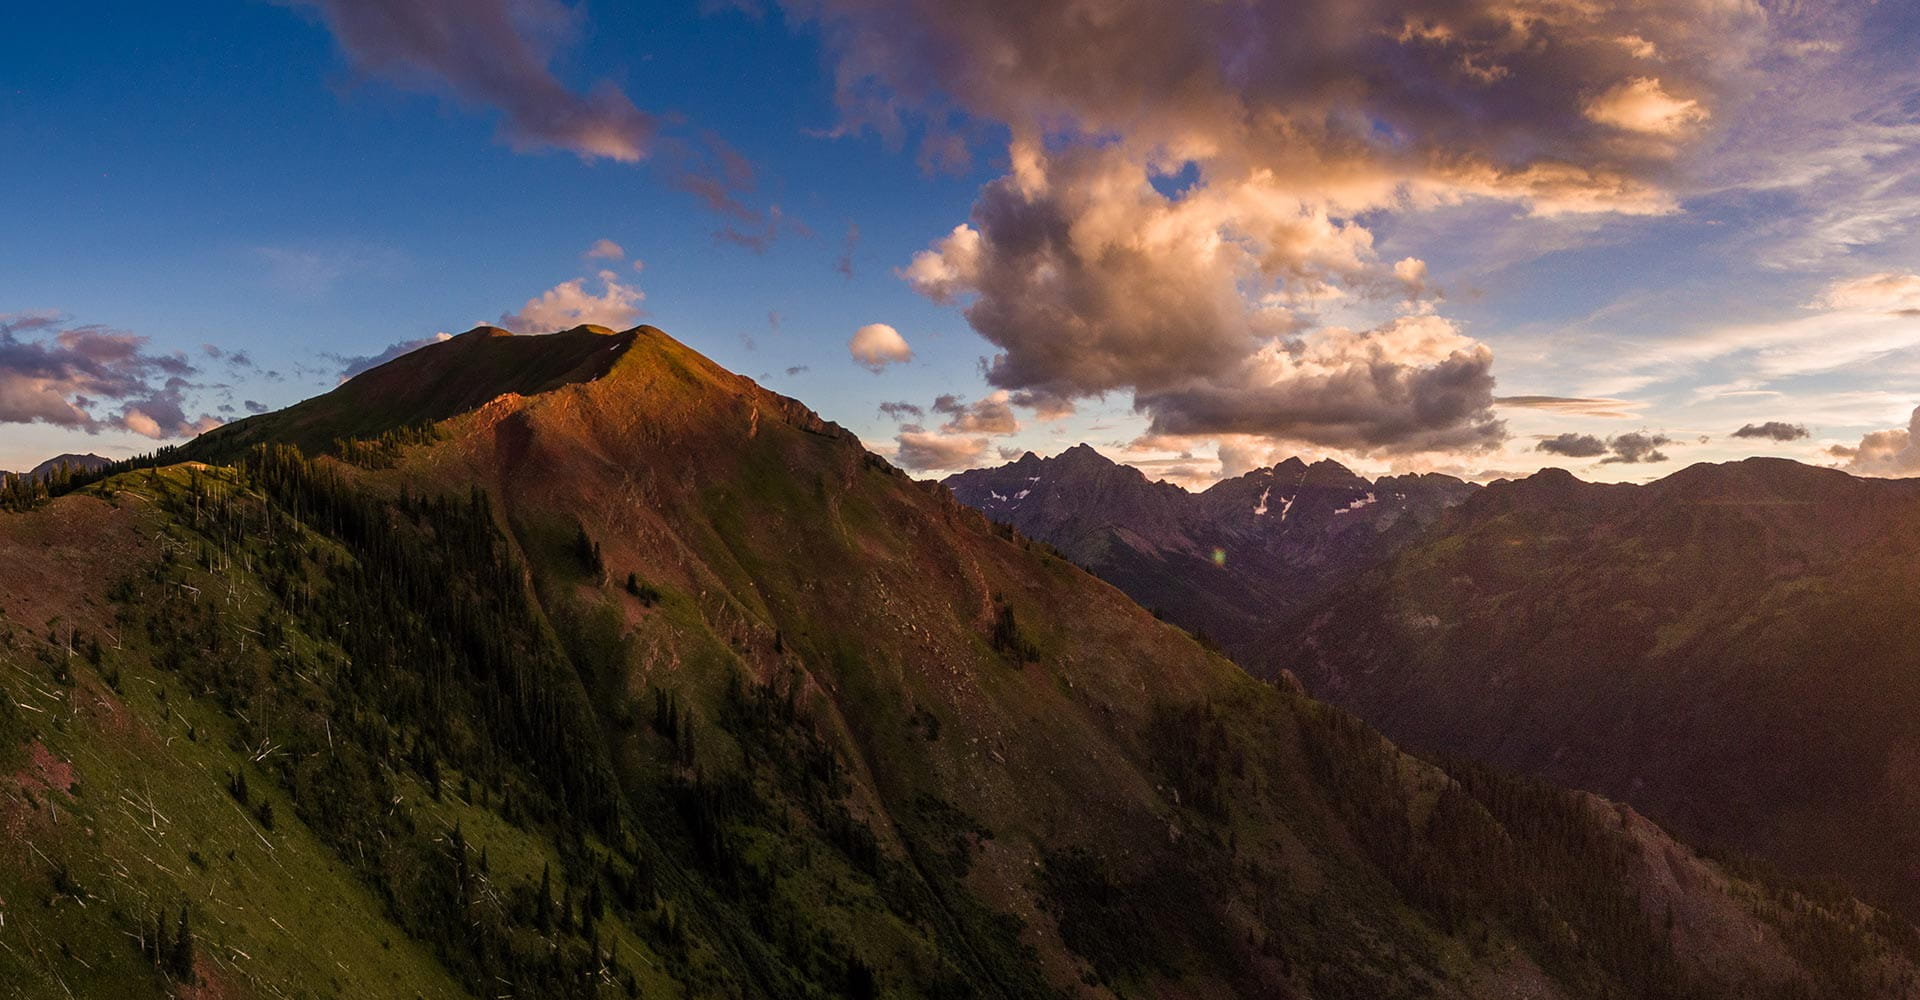 Aspen Highlands and Highland Peak at sunset in summer